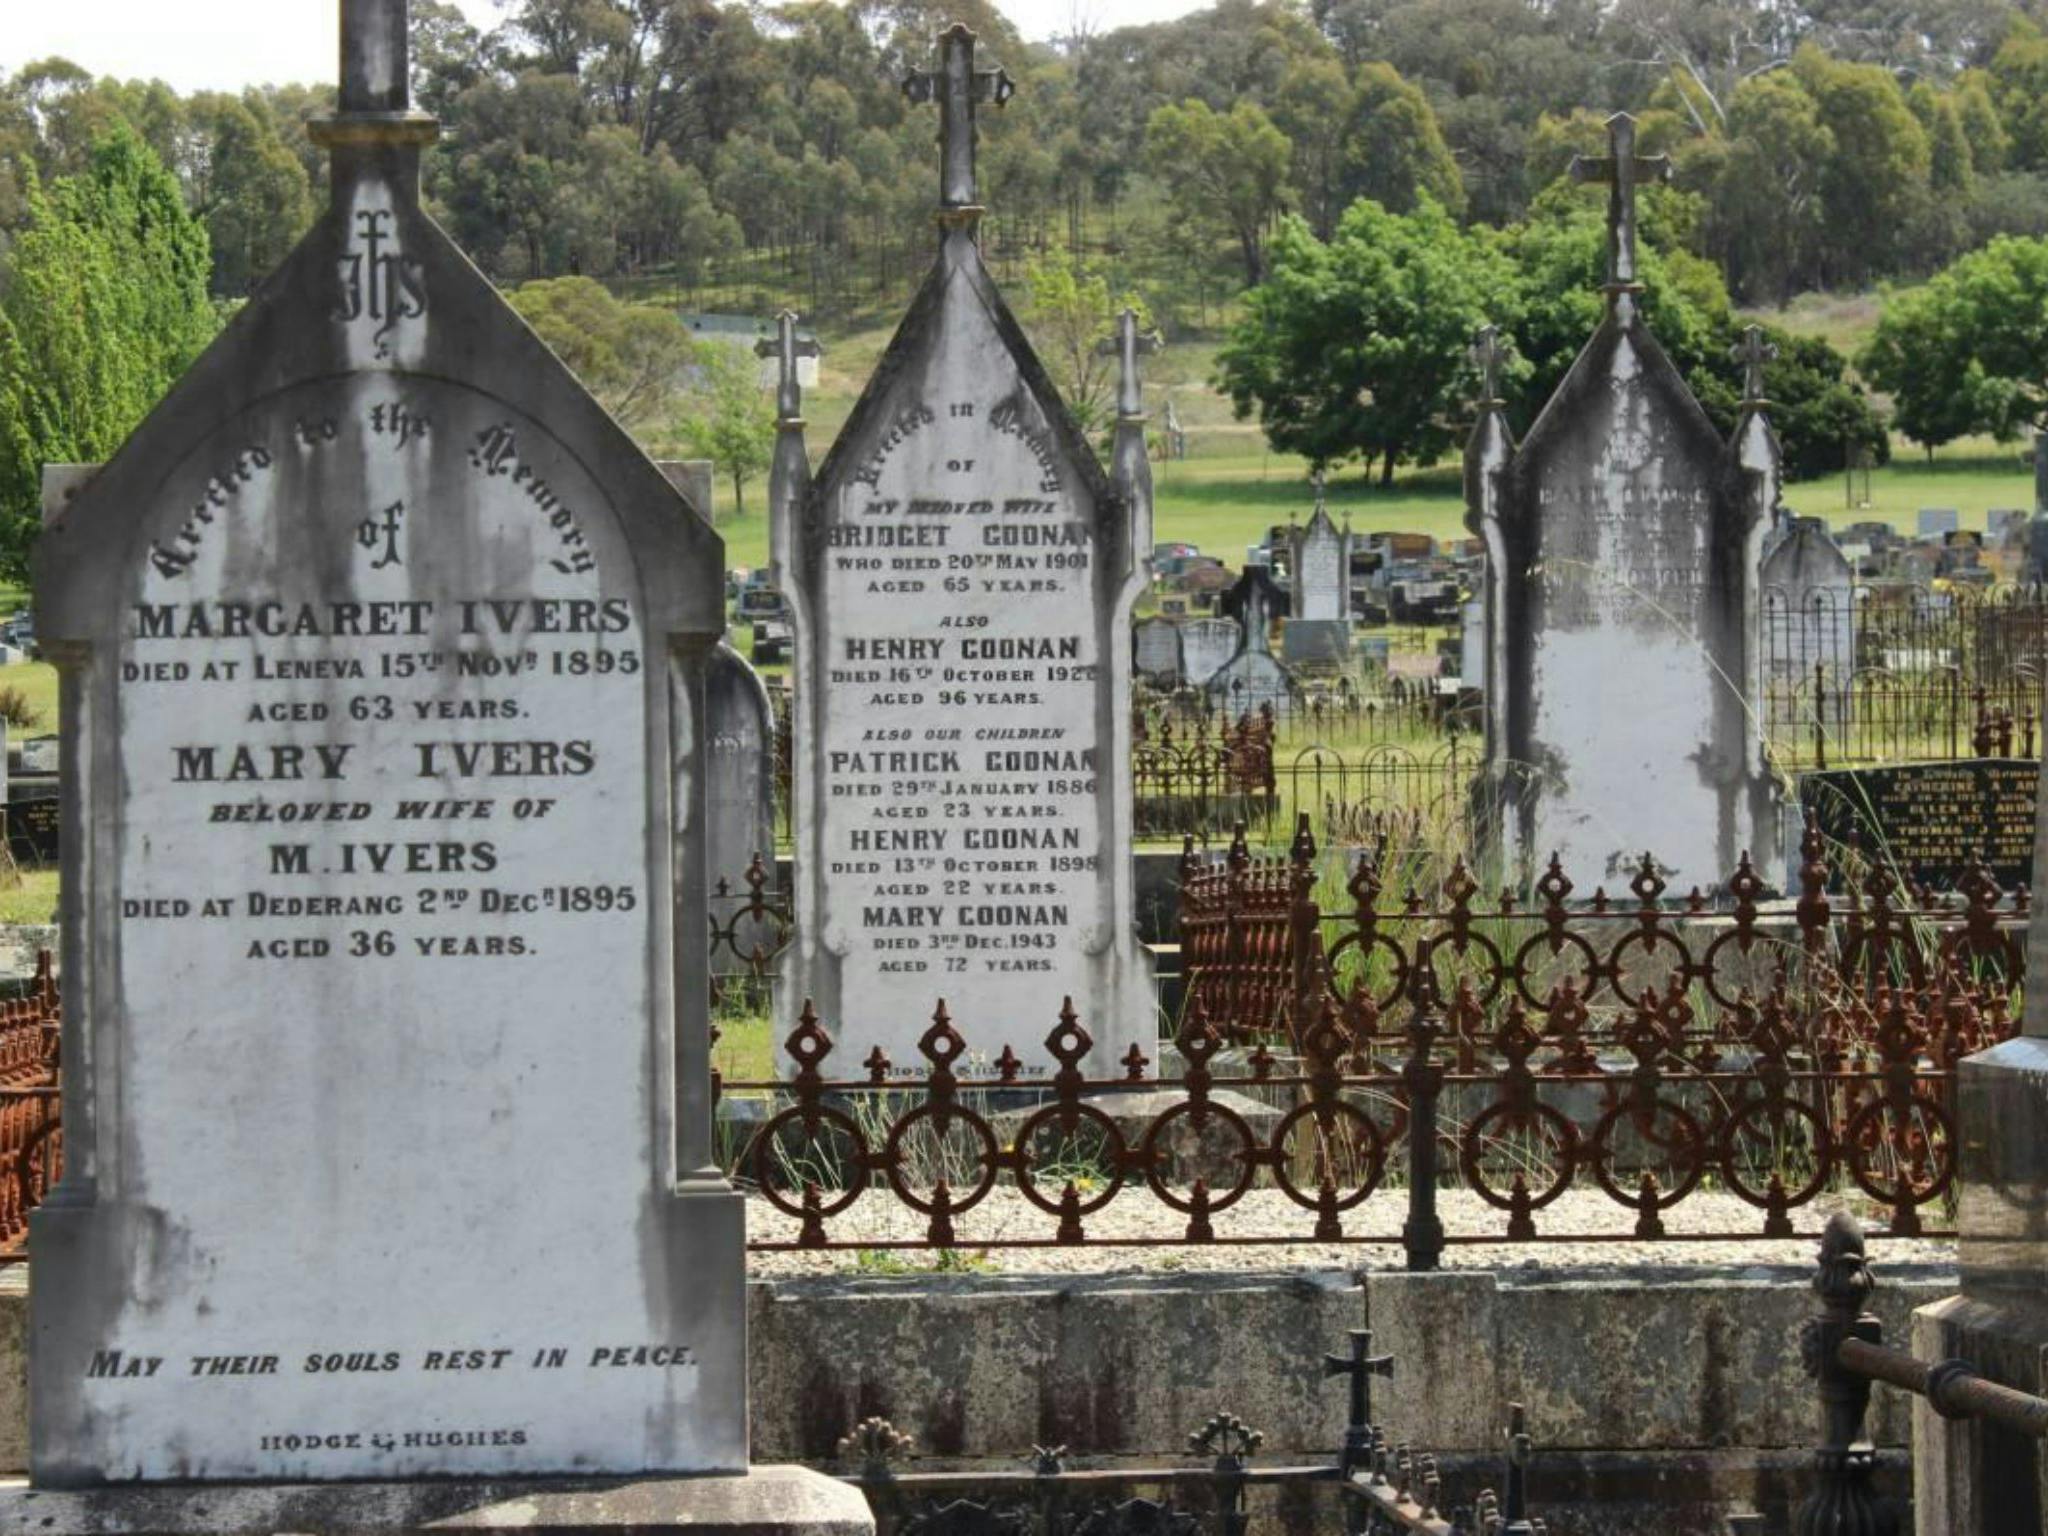 Yackandandah Cemetery